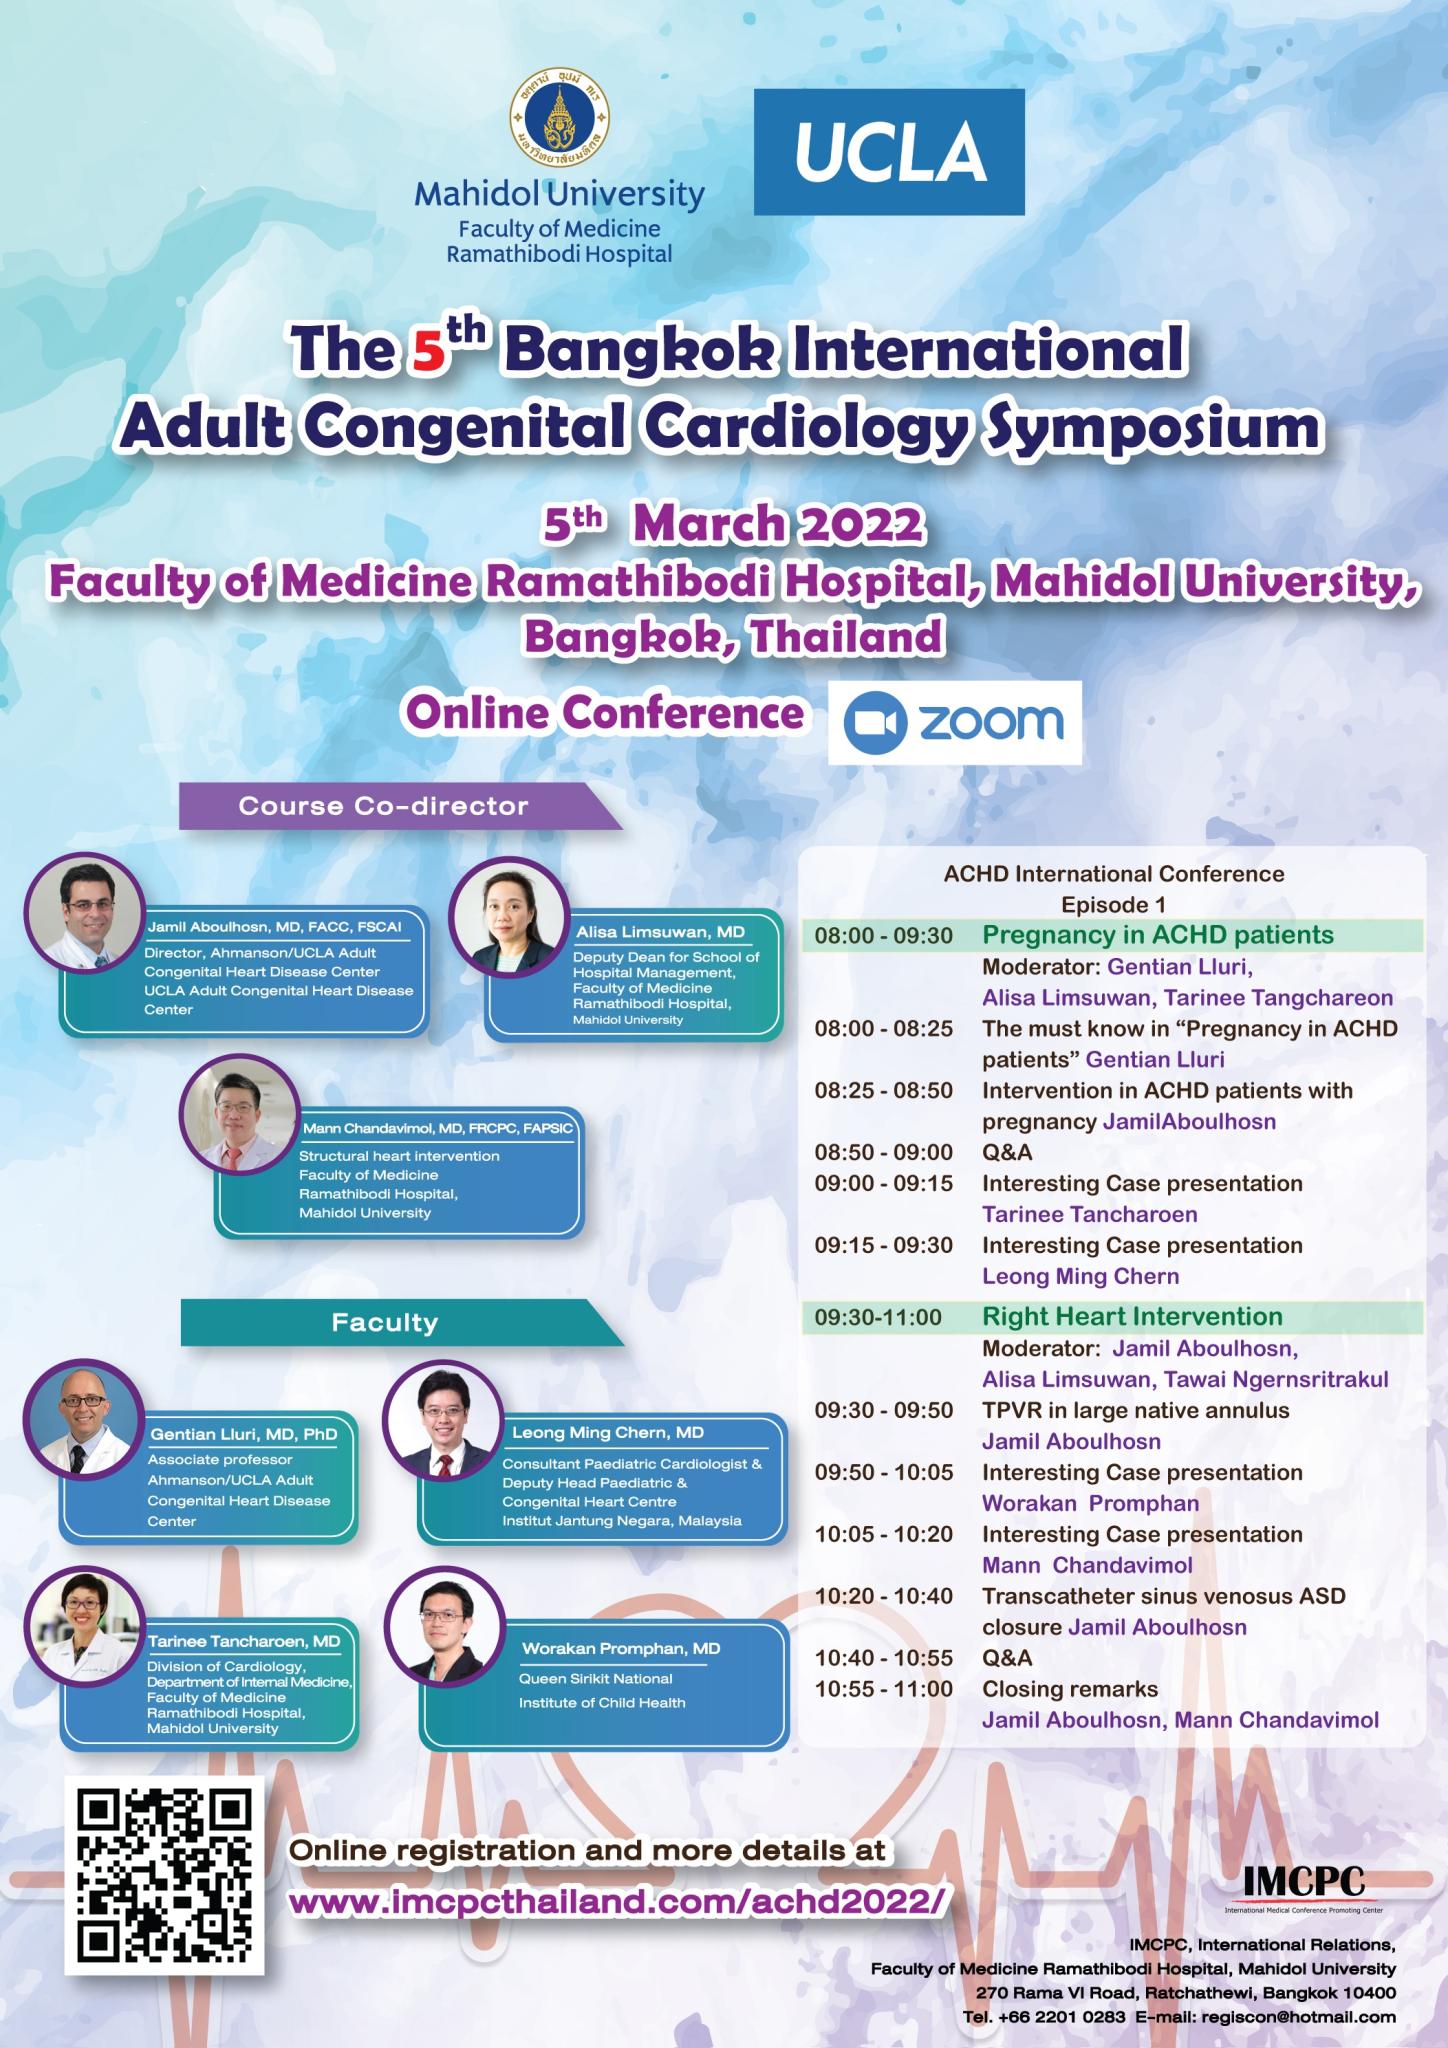 The 5th Bangkok International Adult Congenital Cardiology Symposium